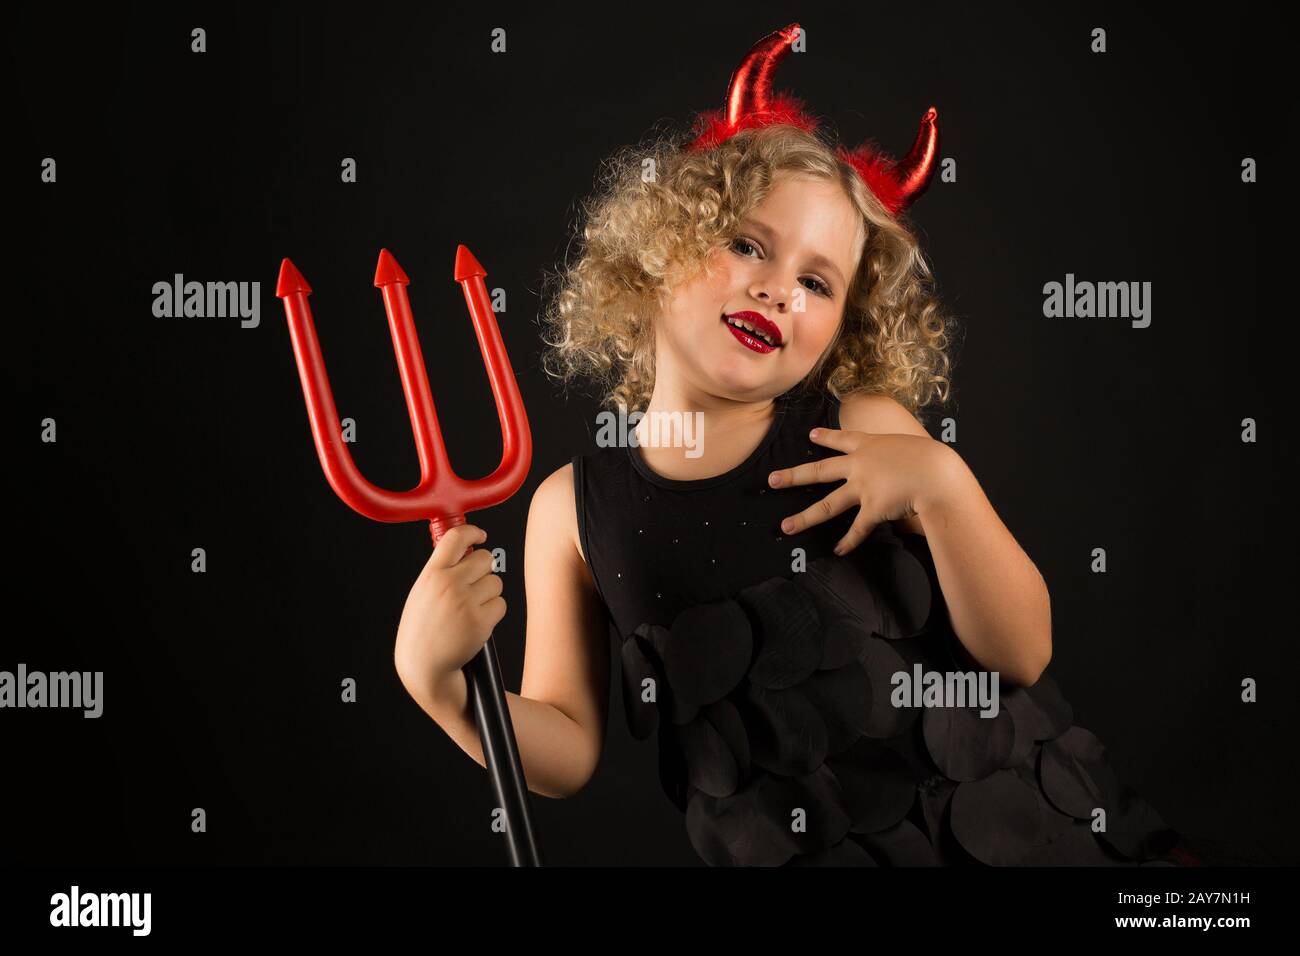 Attractive girl in devils costume Stock Photo - Alamy